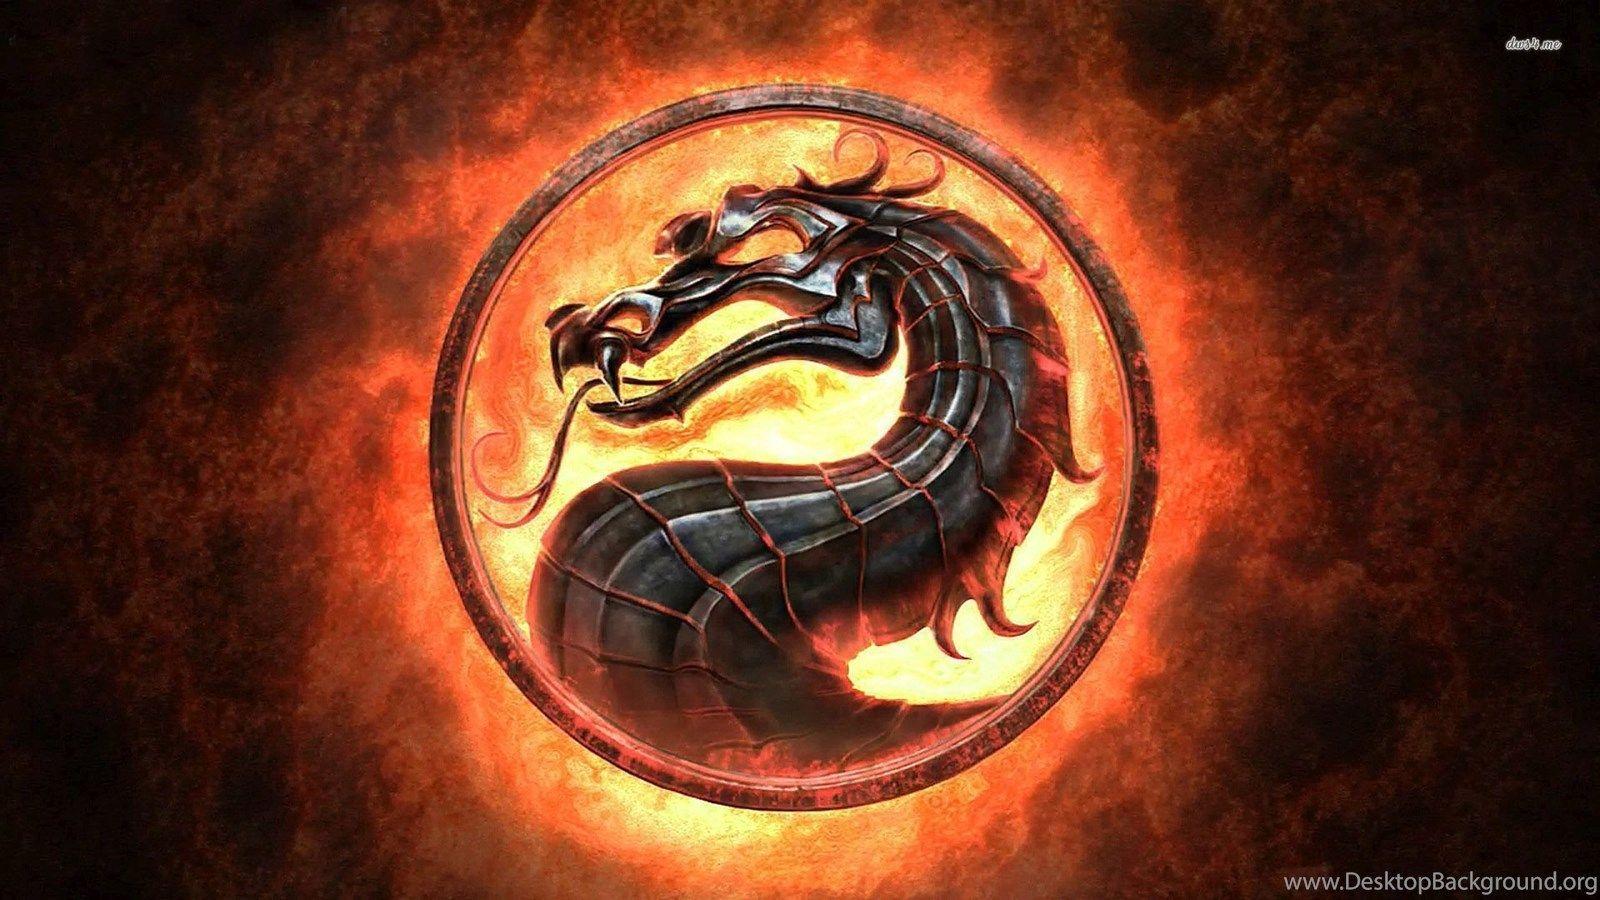 Mortal Kombat 9 Sub Zero Vs Scorpion Wallpaper. Desktop Background